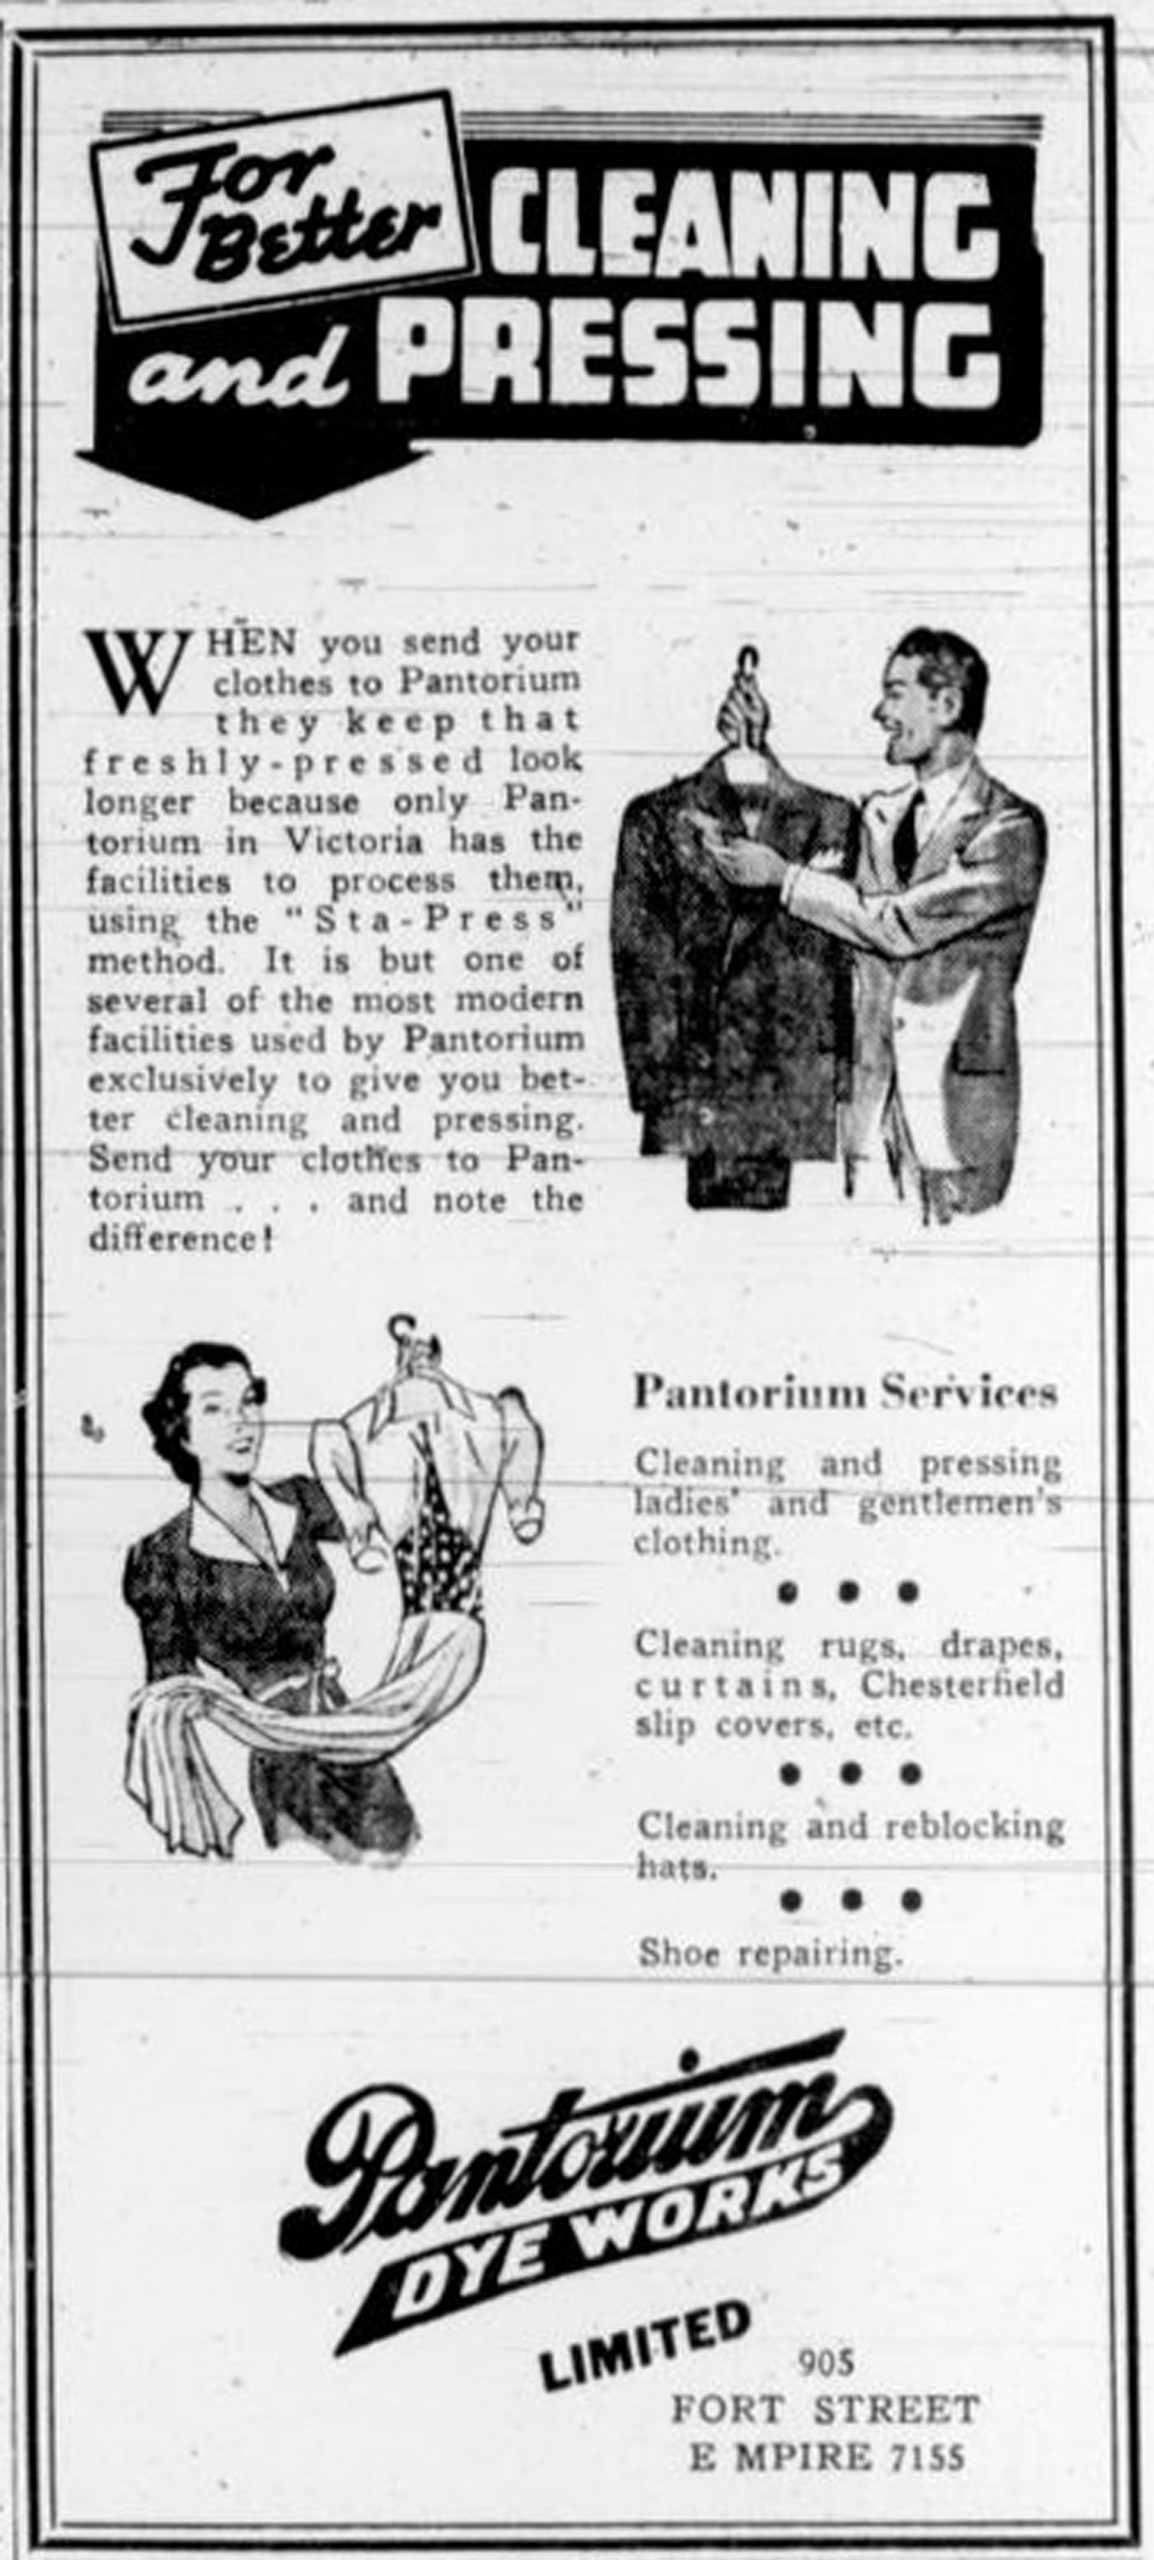 1938 advertisement for Pantorium Dye Works, 905 Fort Street.